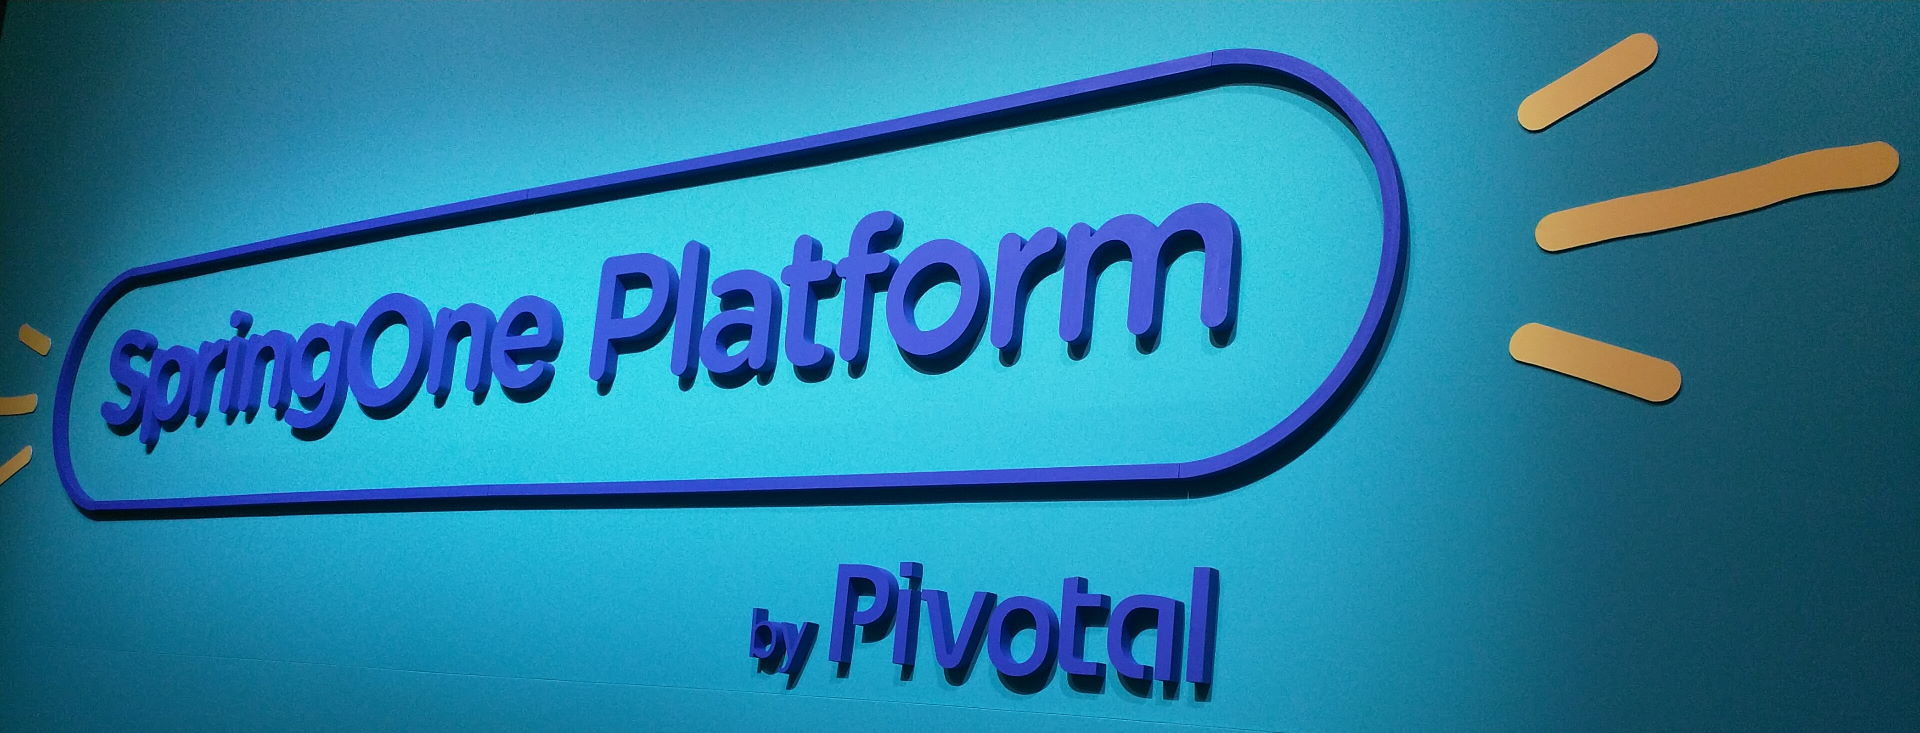 SpringOne Platform by Pivotal